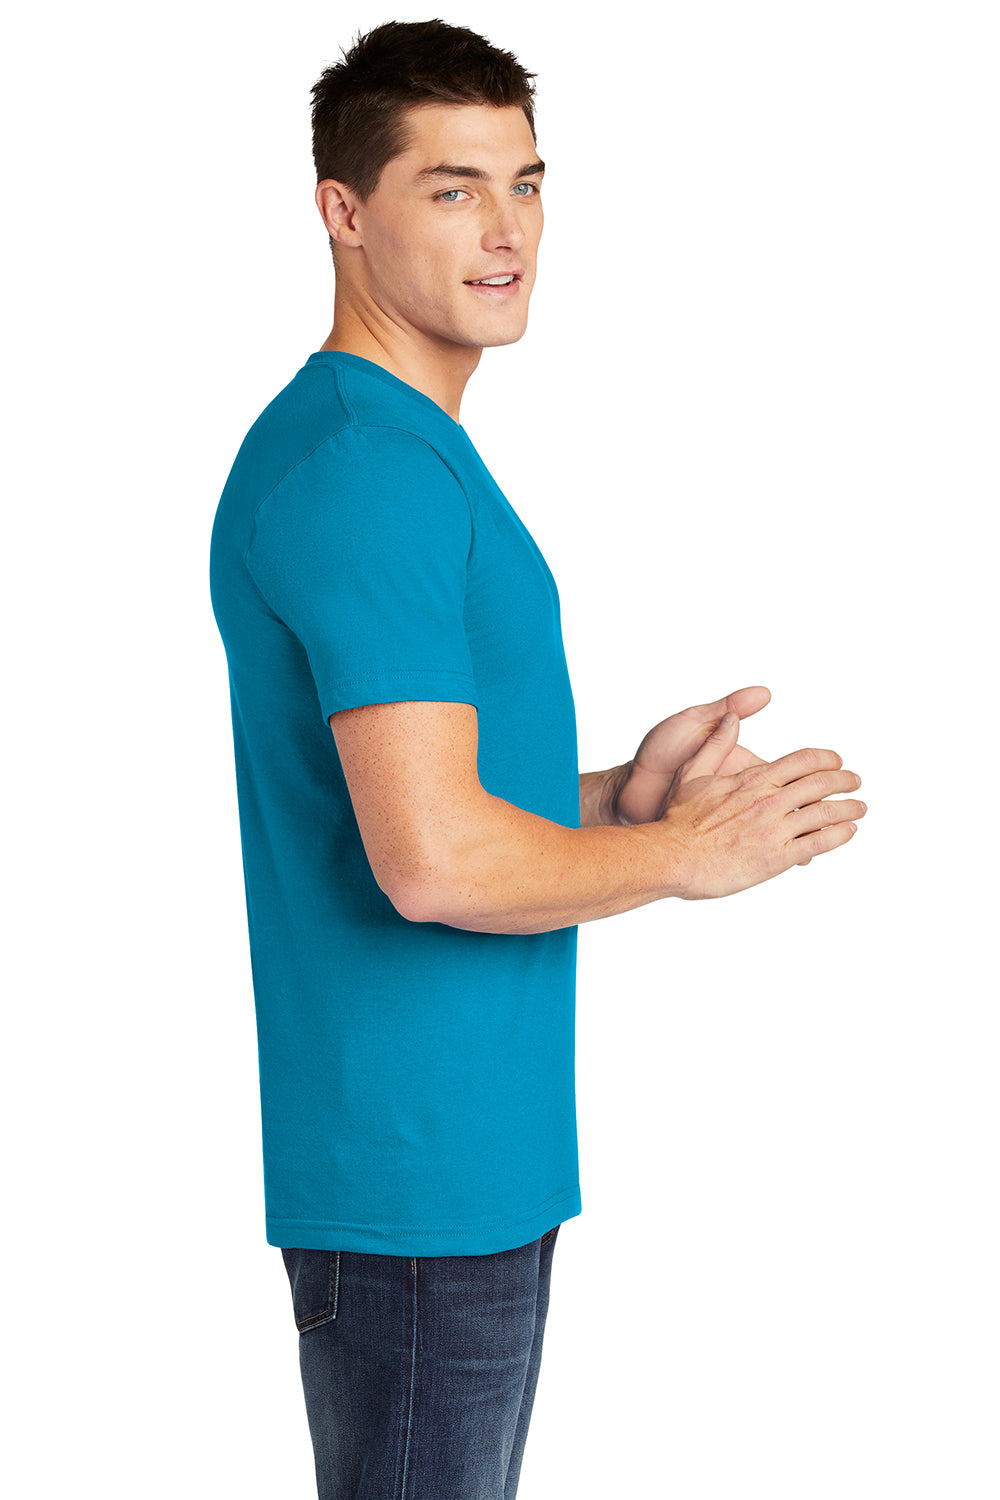 American Apparel 2001 Mens Fine Jersey Short Sleeve Crewneck T-Shirt Teal Blue Model Side